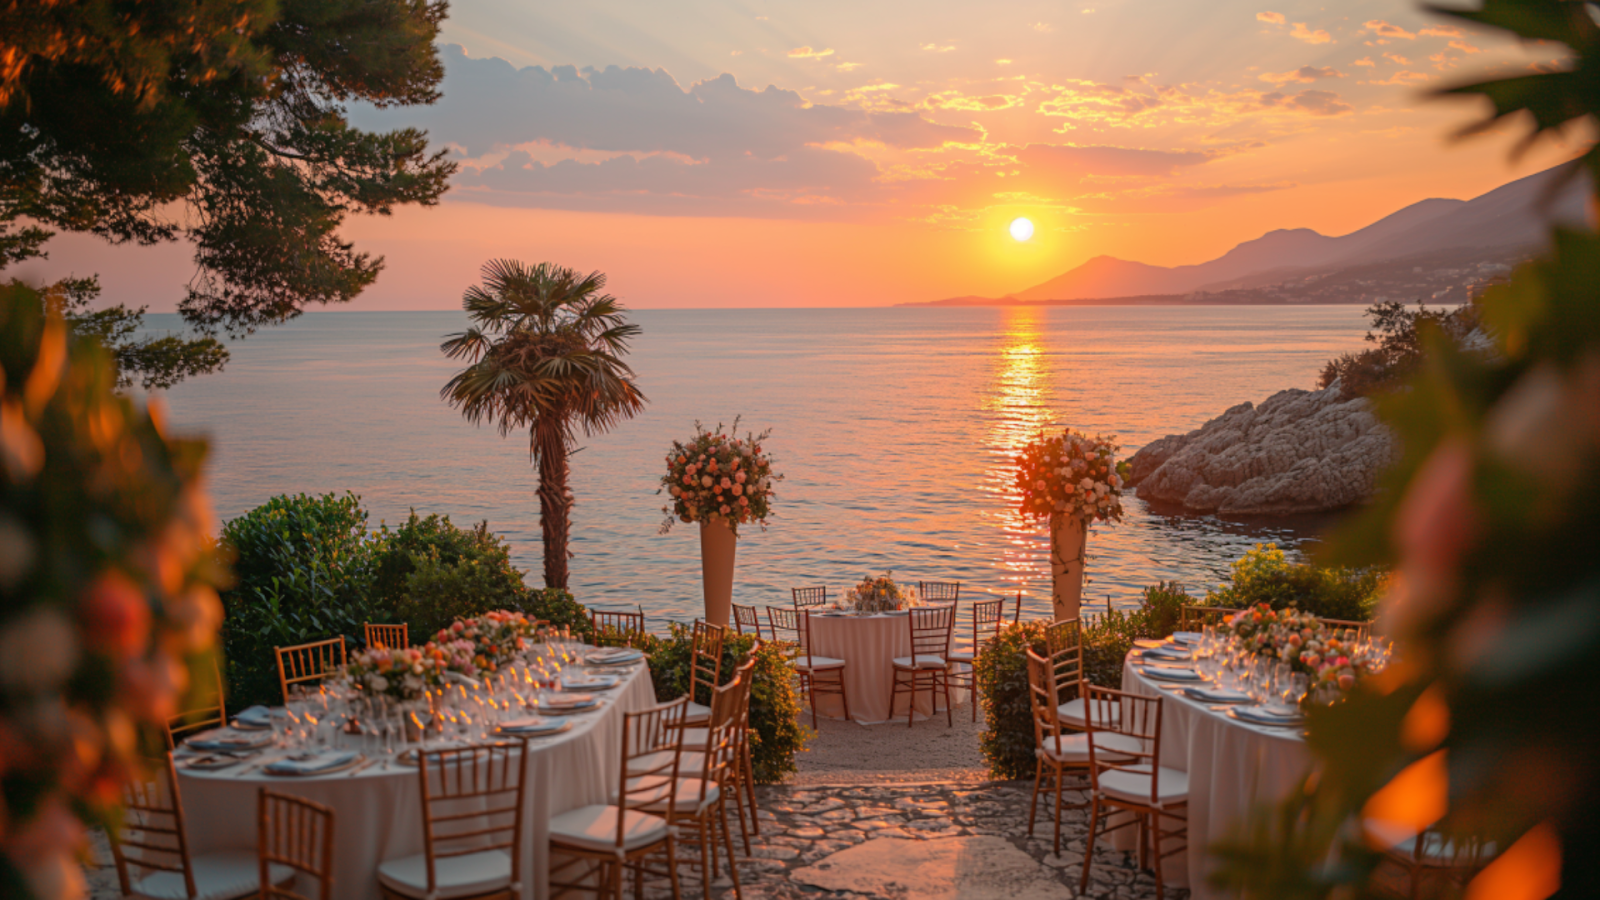 A romantic sunset ceremony overlooking the Adriatic Sea in Split.